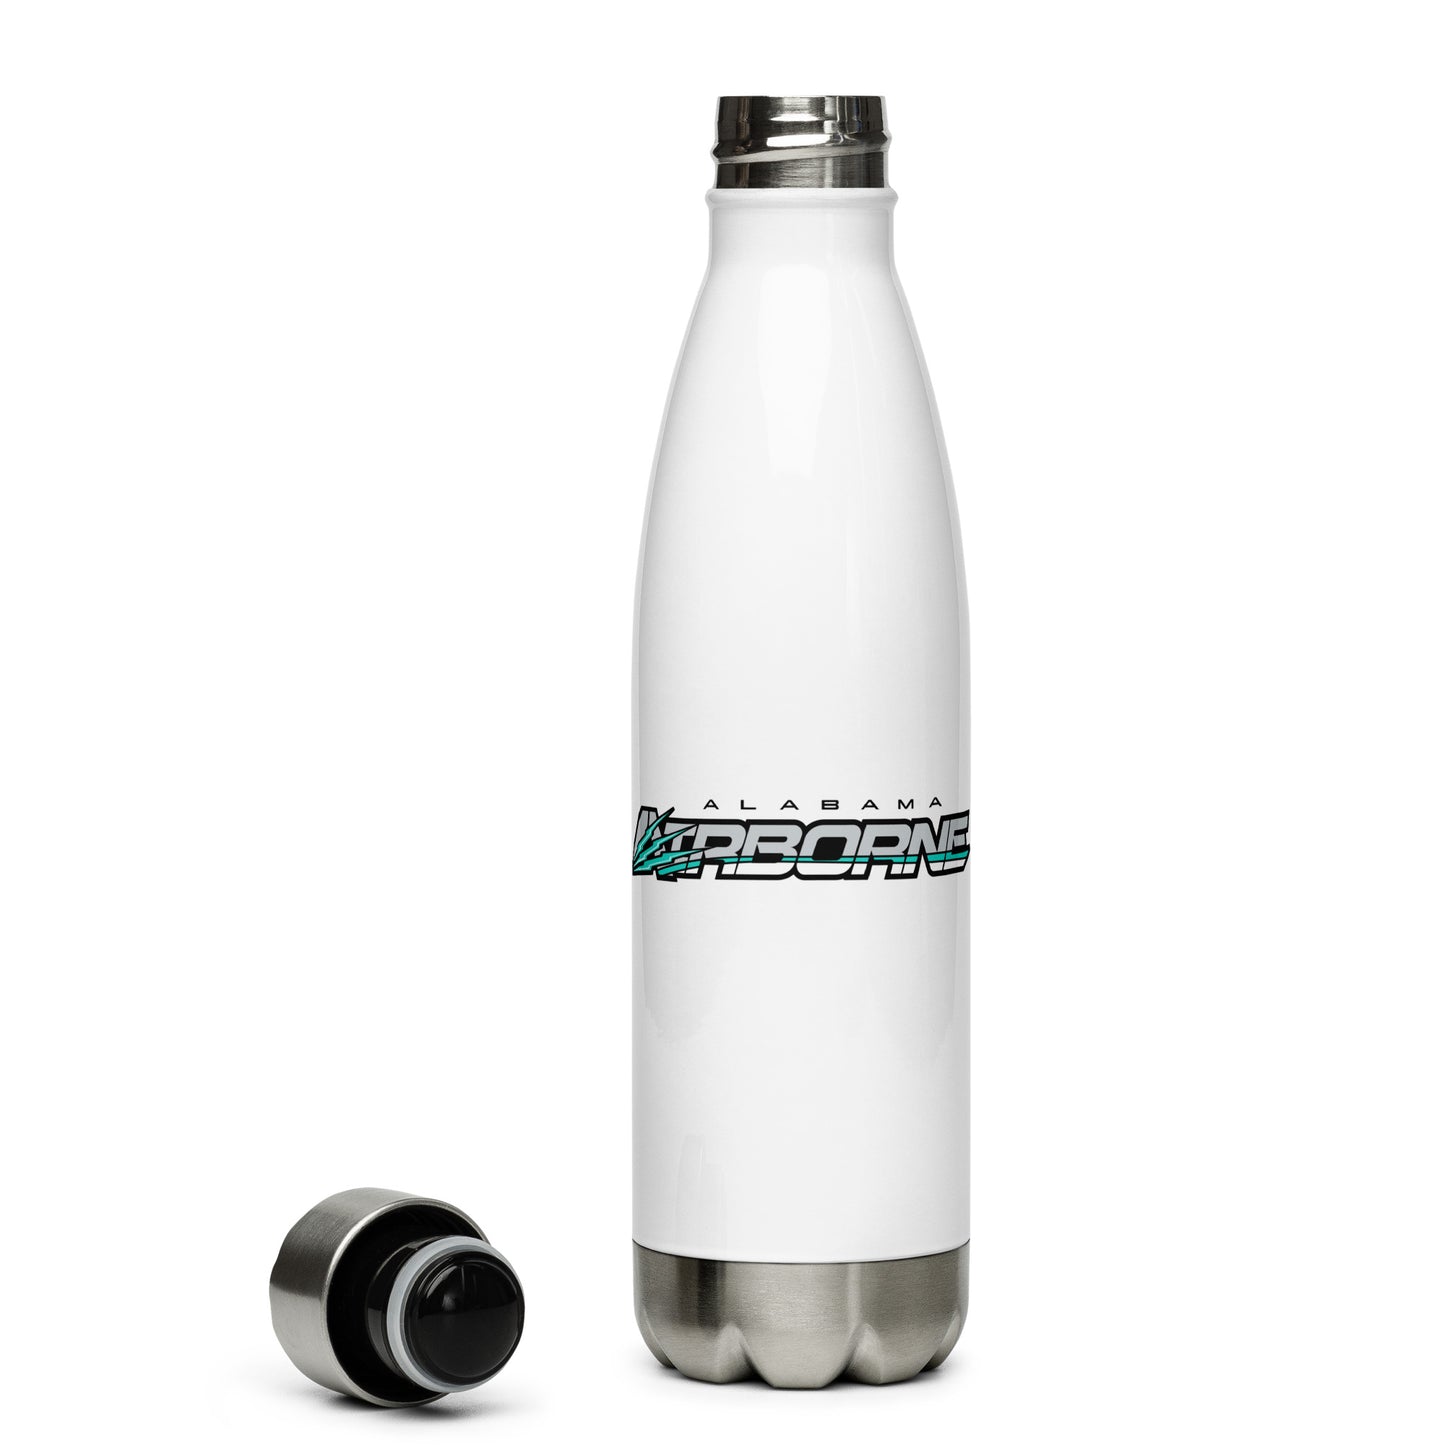 Airborne Stainless Steel Water Bottle